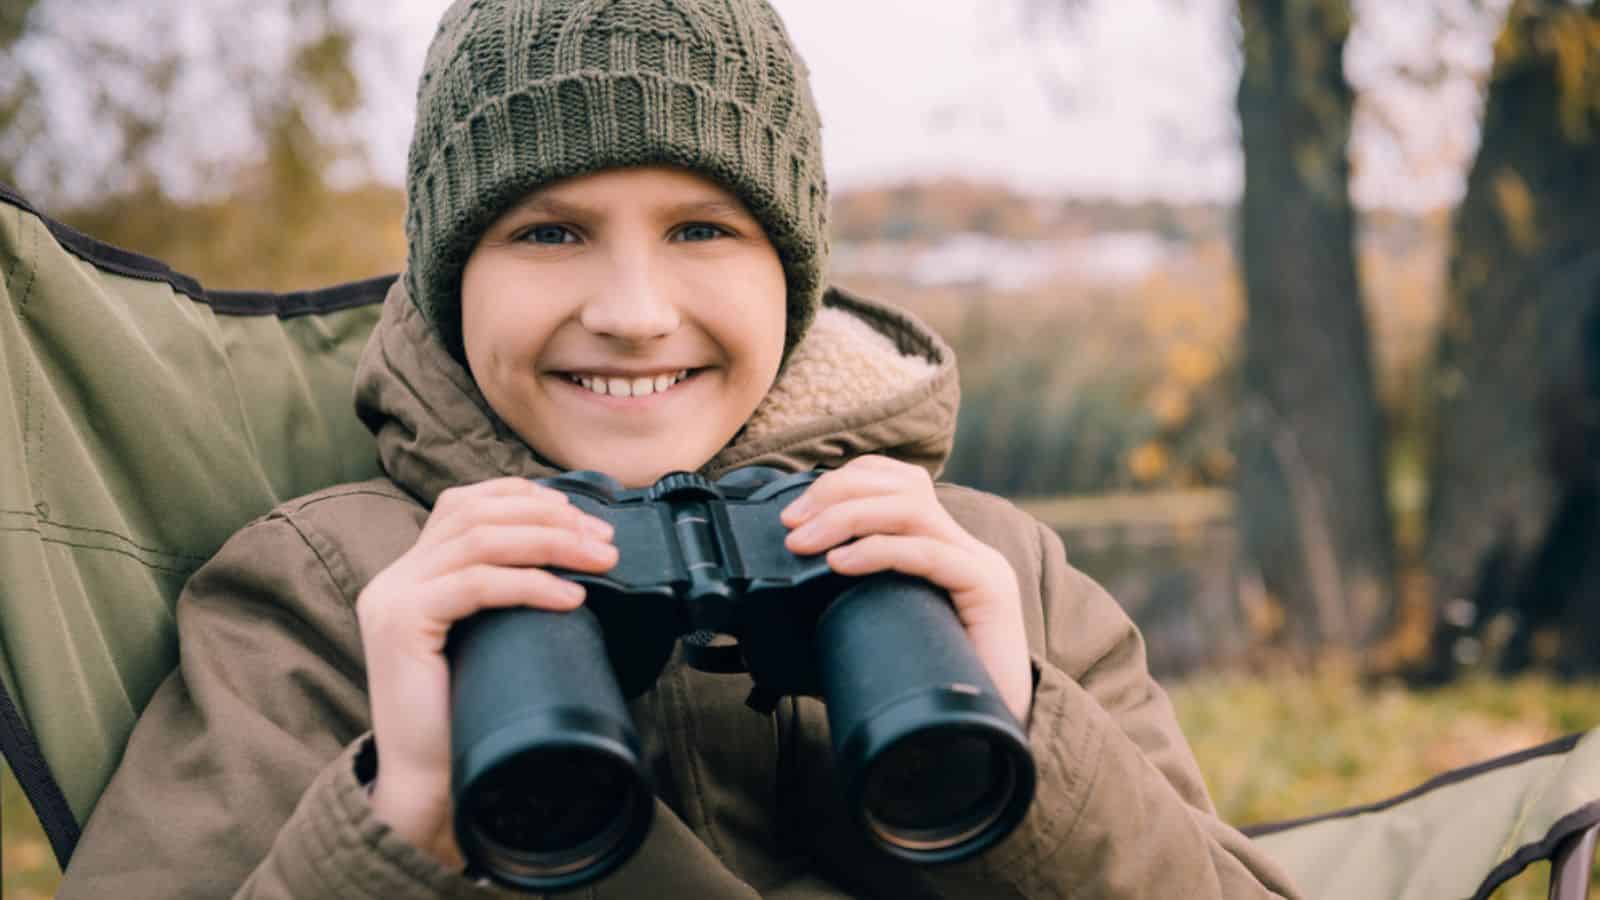 Kid looking at camera and holding binoculars